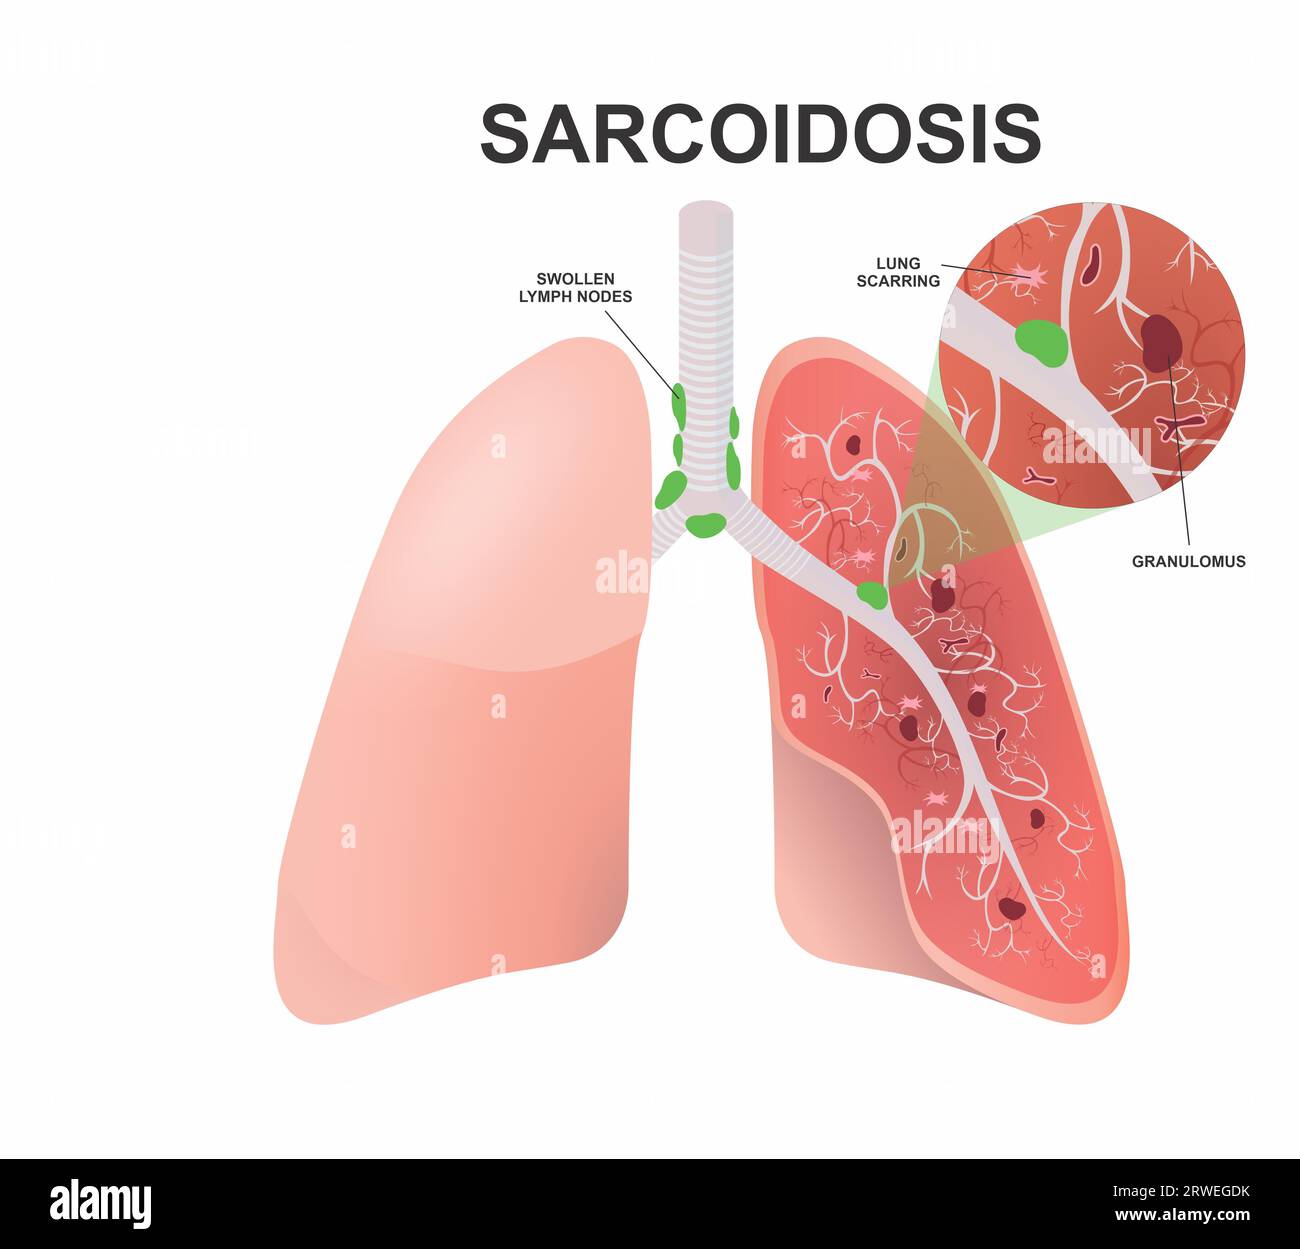 Sarcoidosis Illustration lung disease Stock Photo